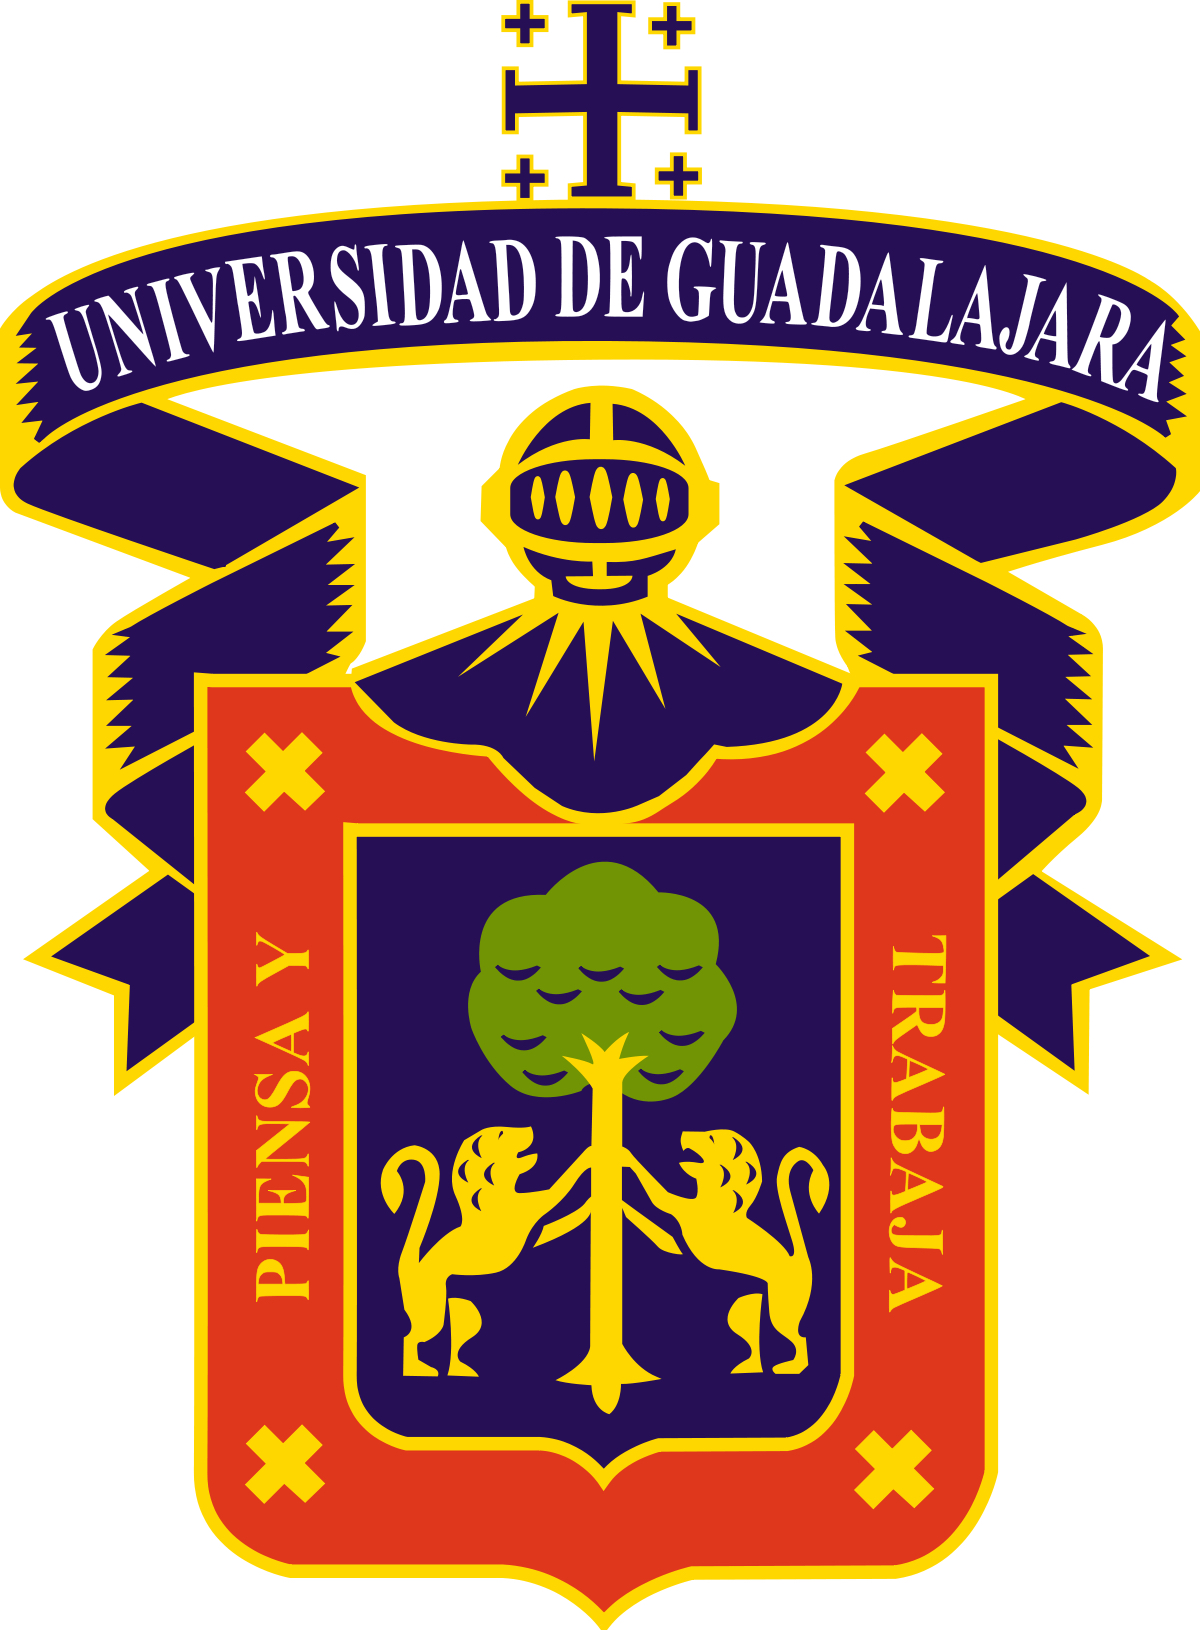 UNIVERSIDAD DE GUADALAJARA (UDG)